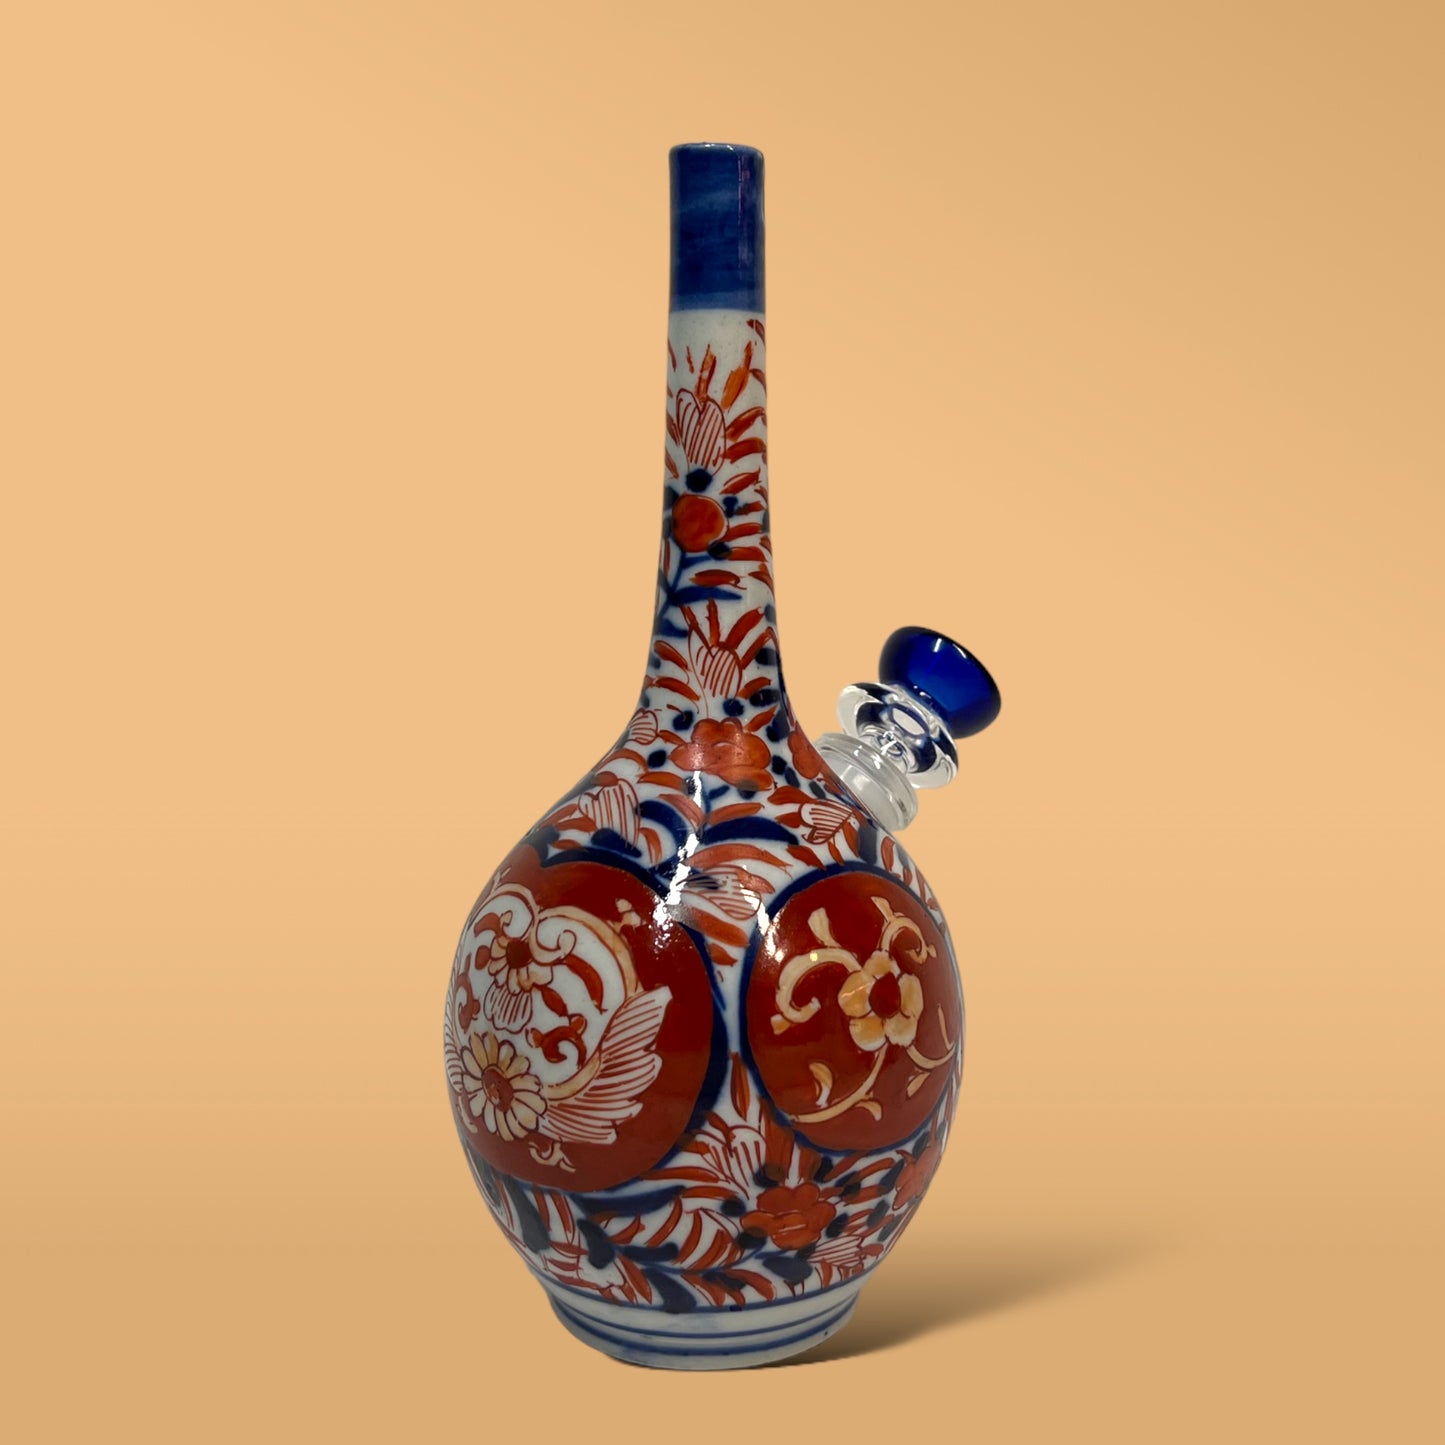 Japanese Imari Vase